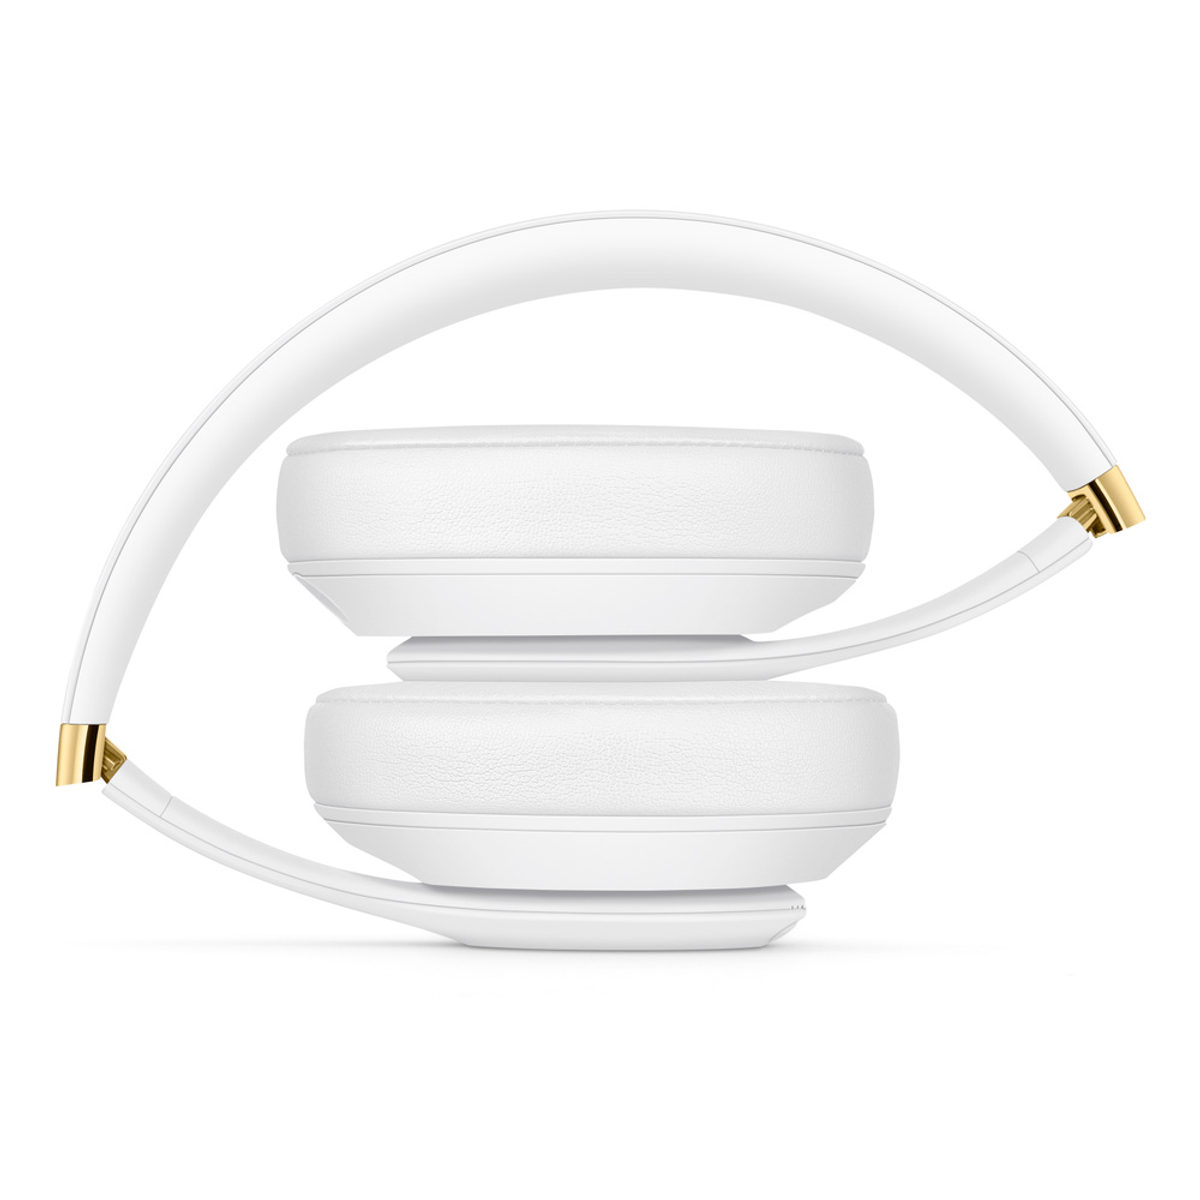 BEATS Kopfhörer Studio3, Weiß Bluetooth Over-ear